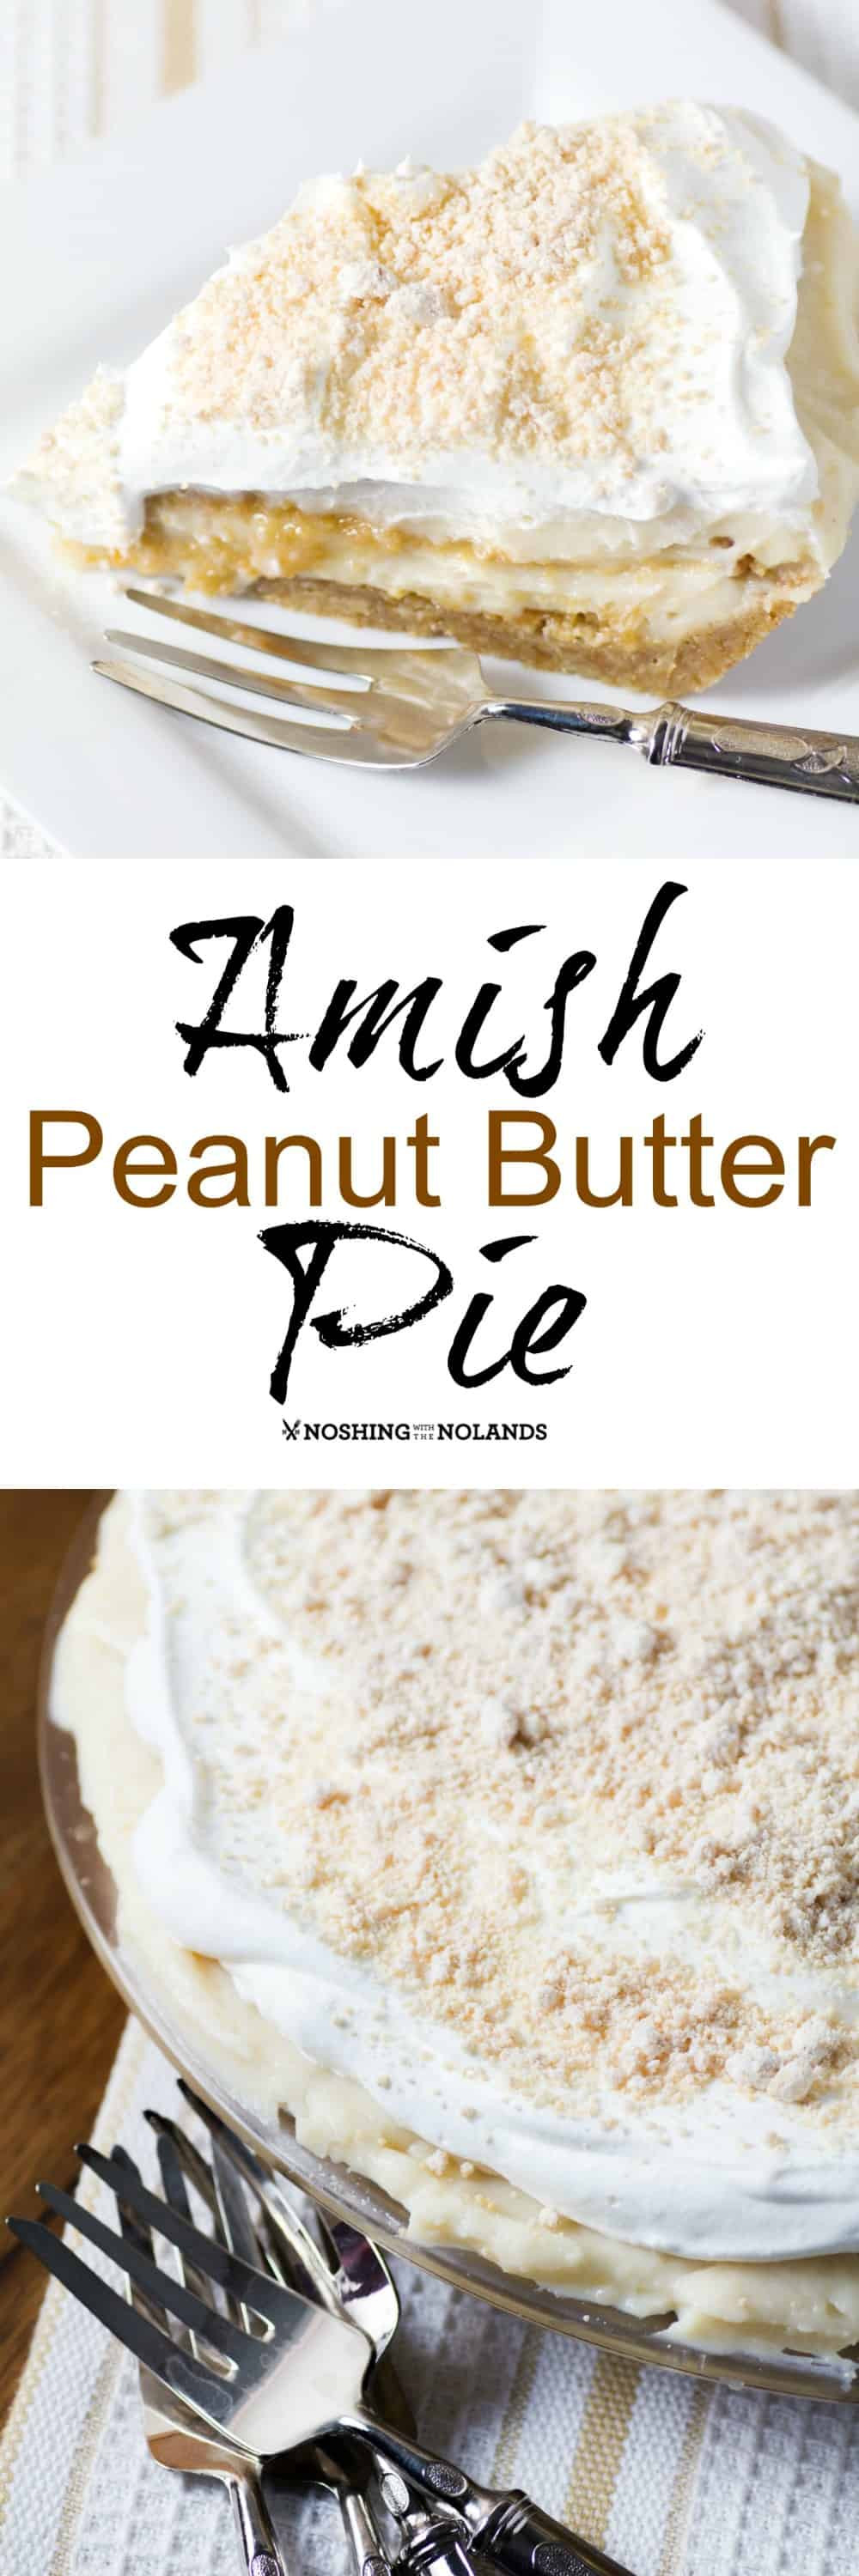 Amish Peanut Butter Pie Recipe
 Amish Peanut Butter Pie